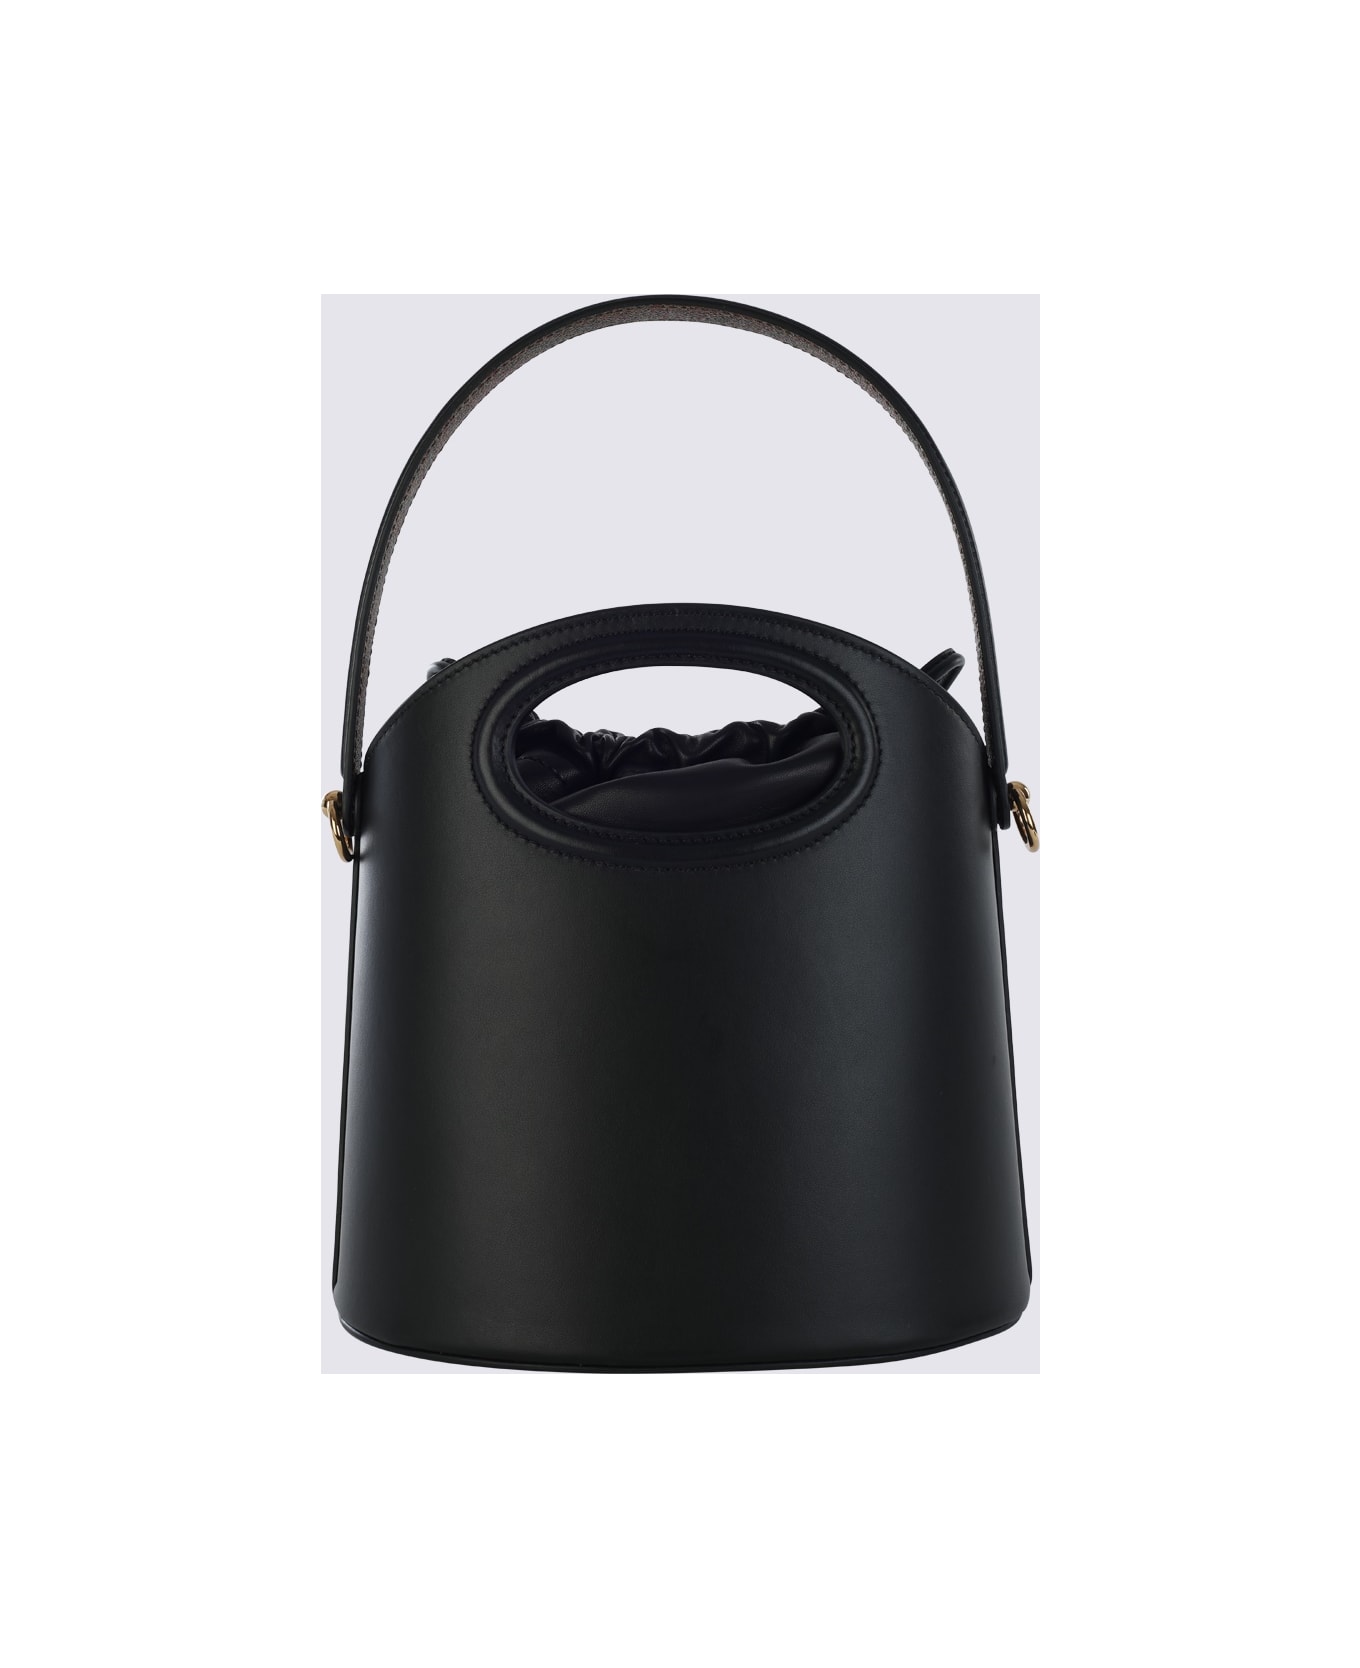 Etro Black Leather Saturno Bucket Bag - Black トートバッグ